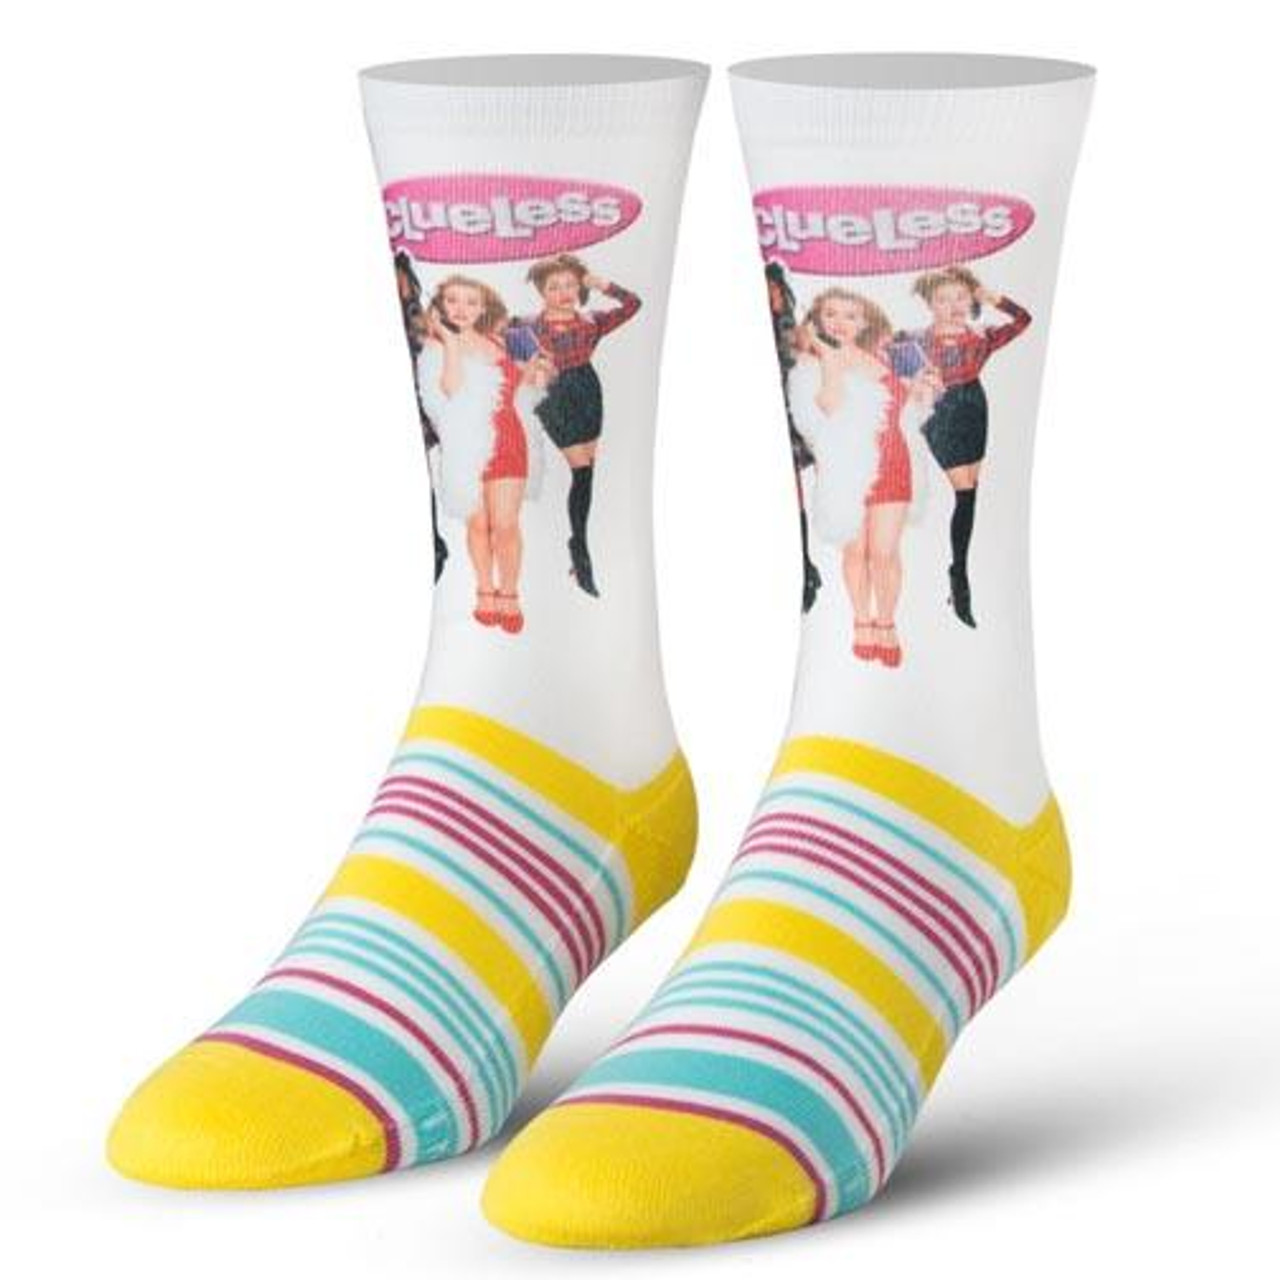 Cool Socks Women's Crew Socks - Mean Girls The Plastics